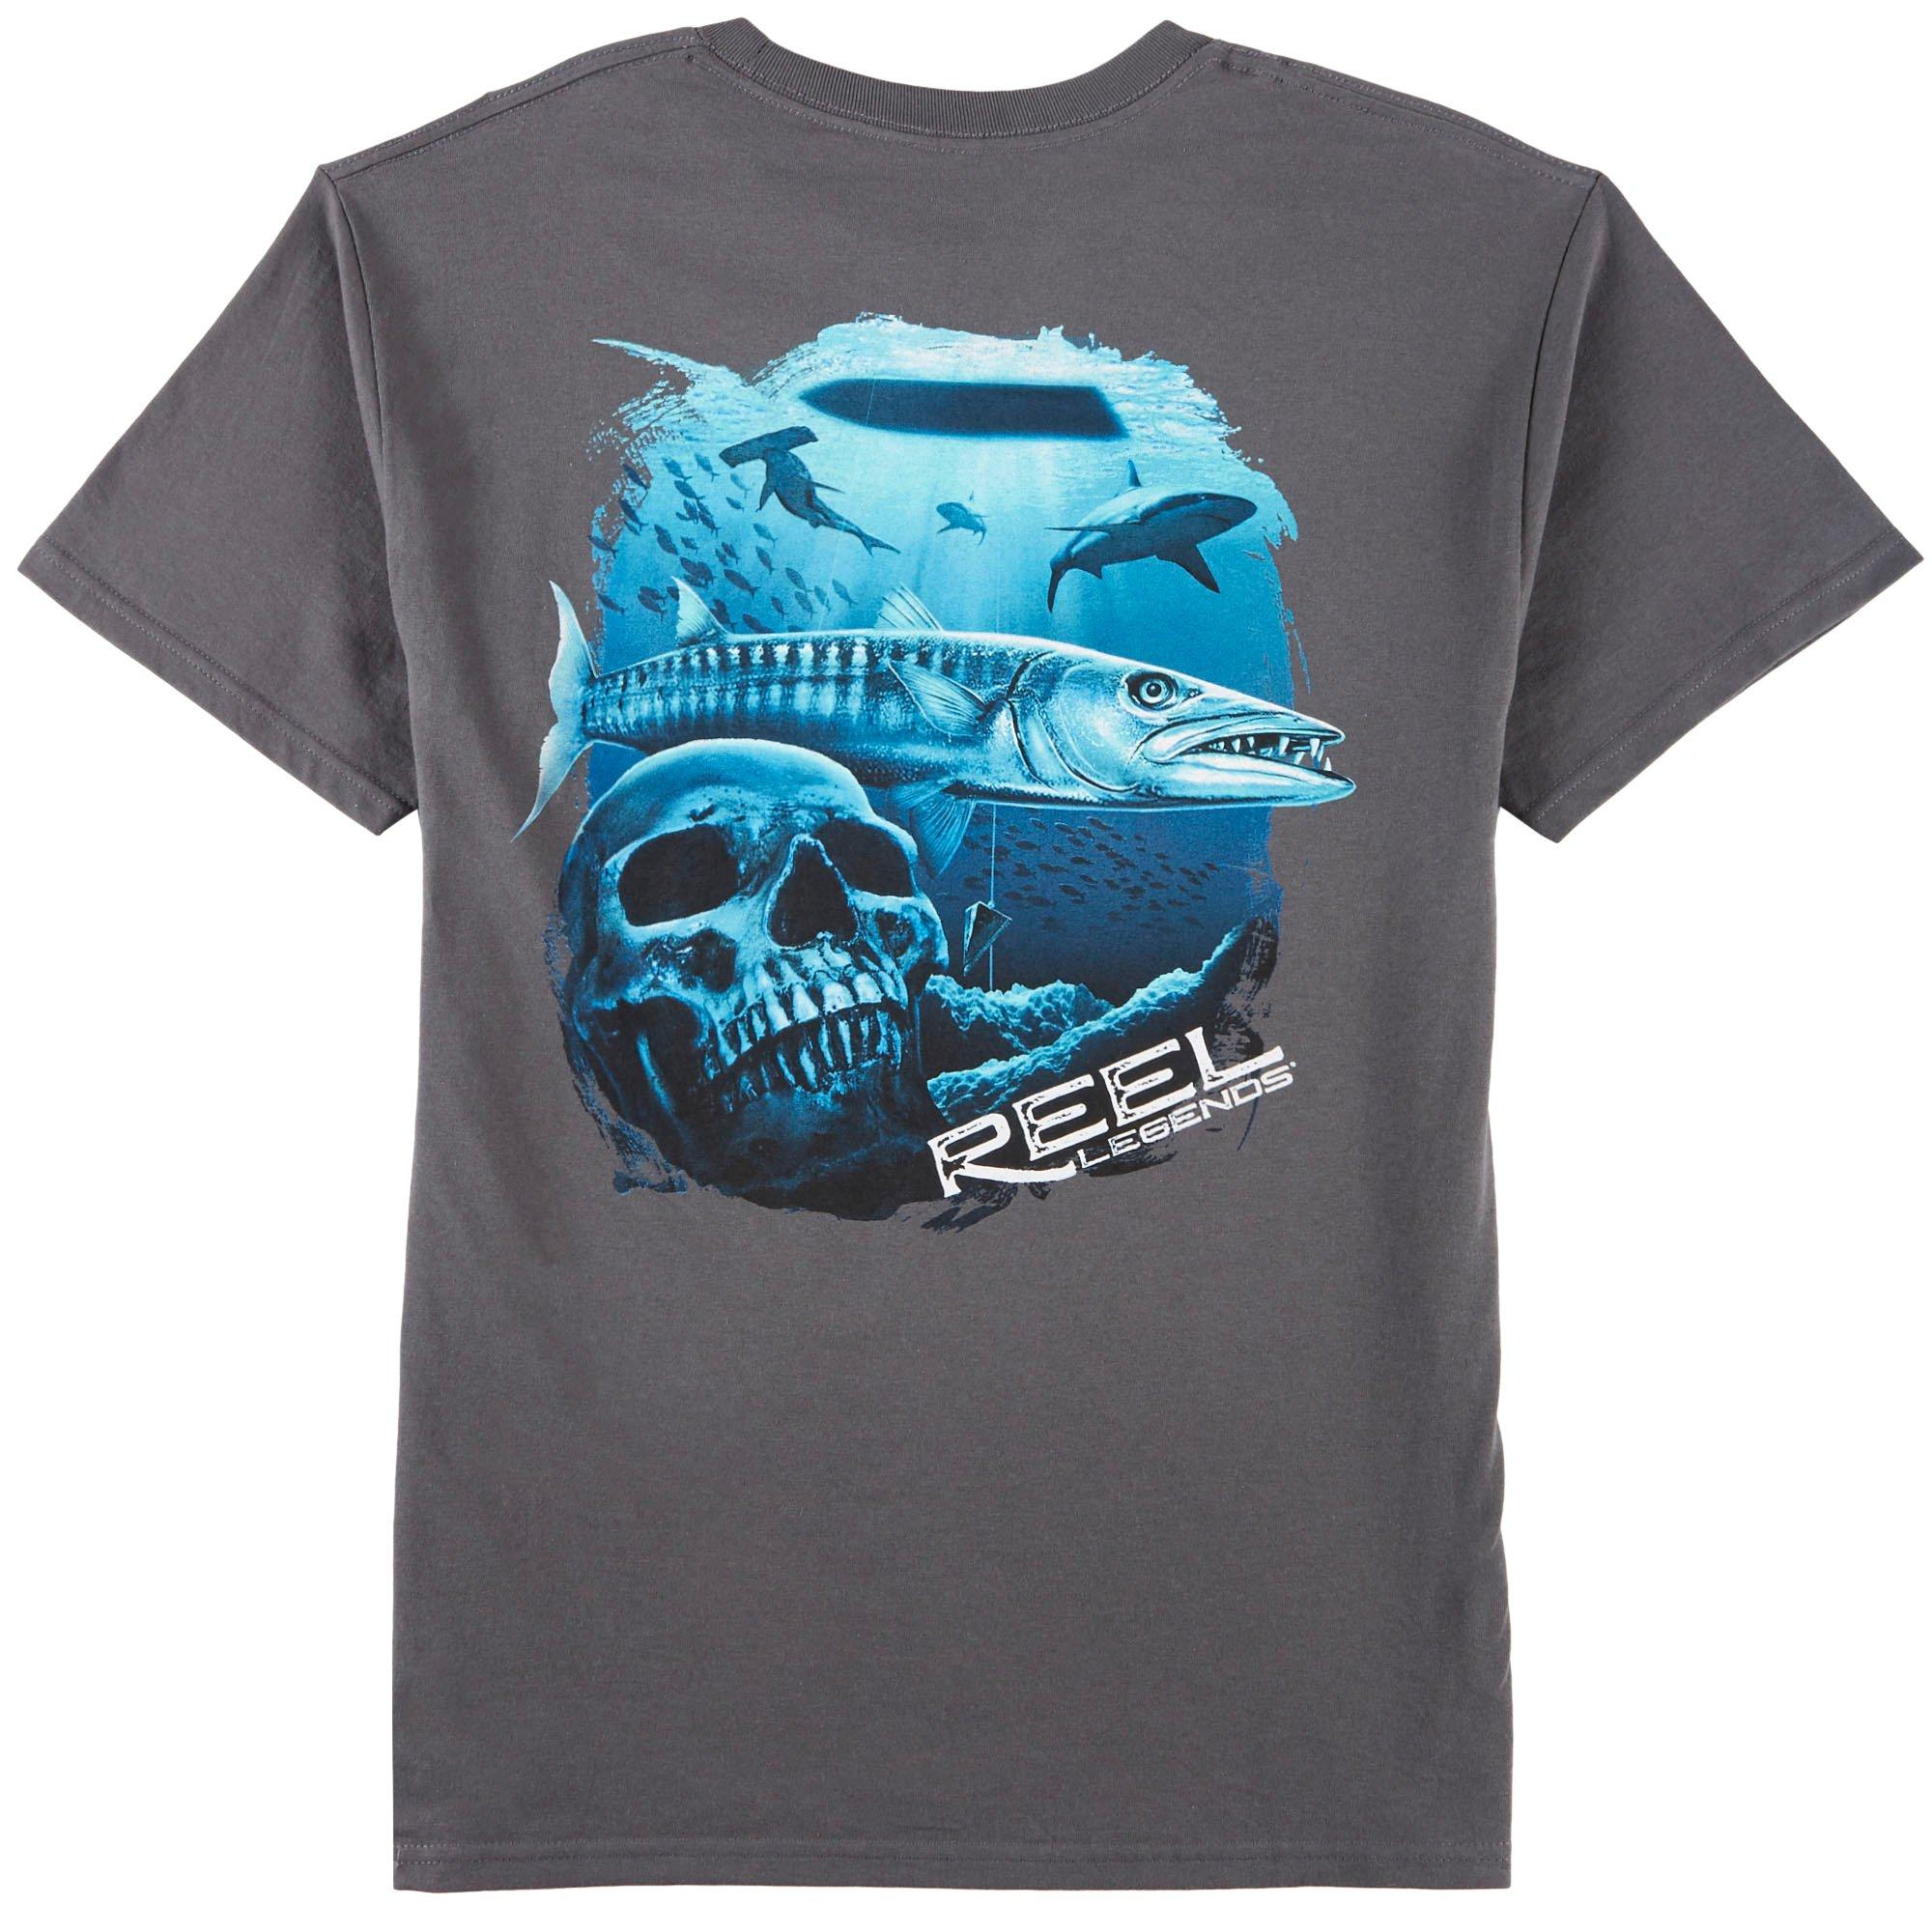 Reel Legends Mens Blue Water Slam T-Shirt